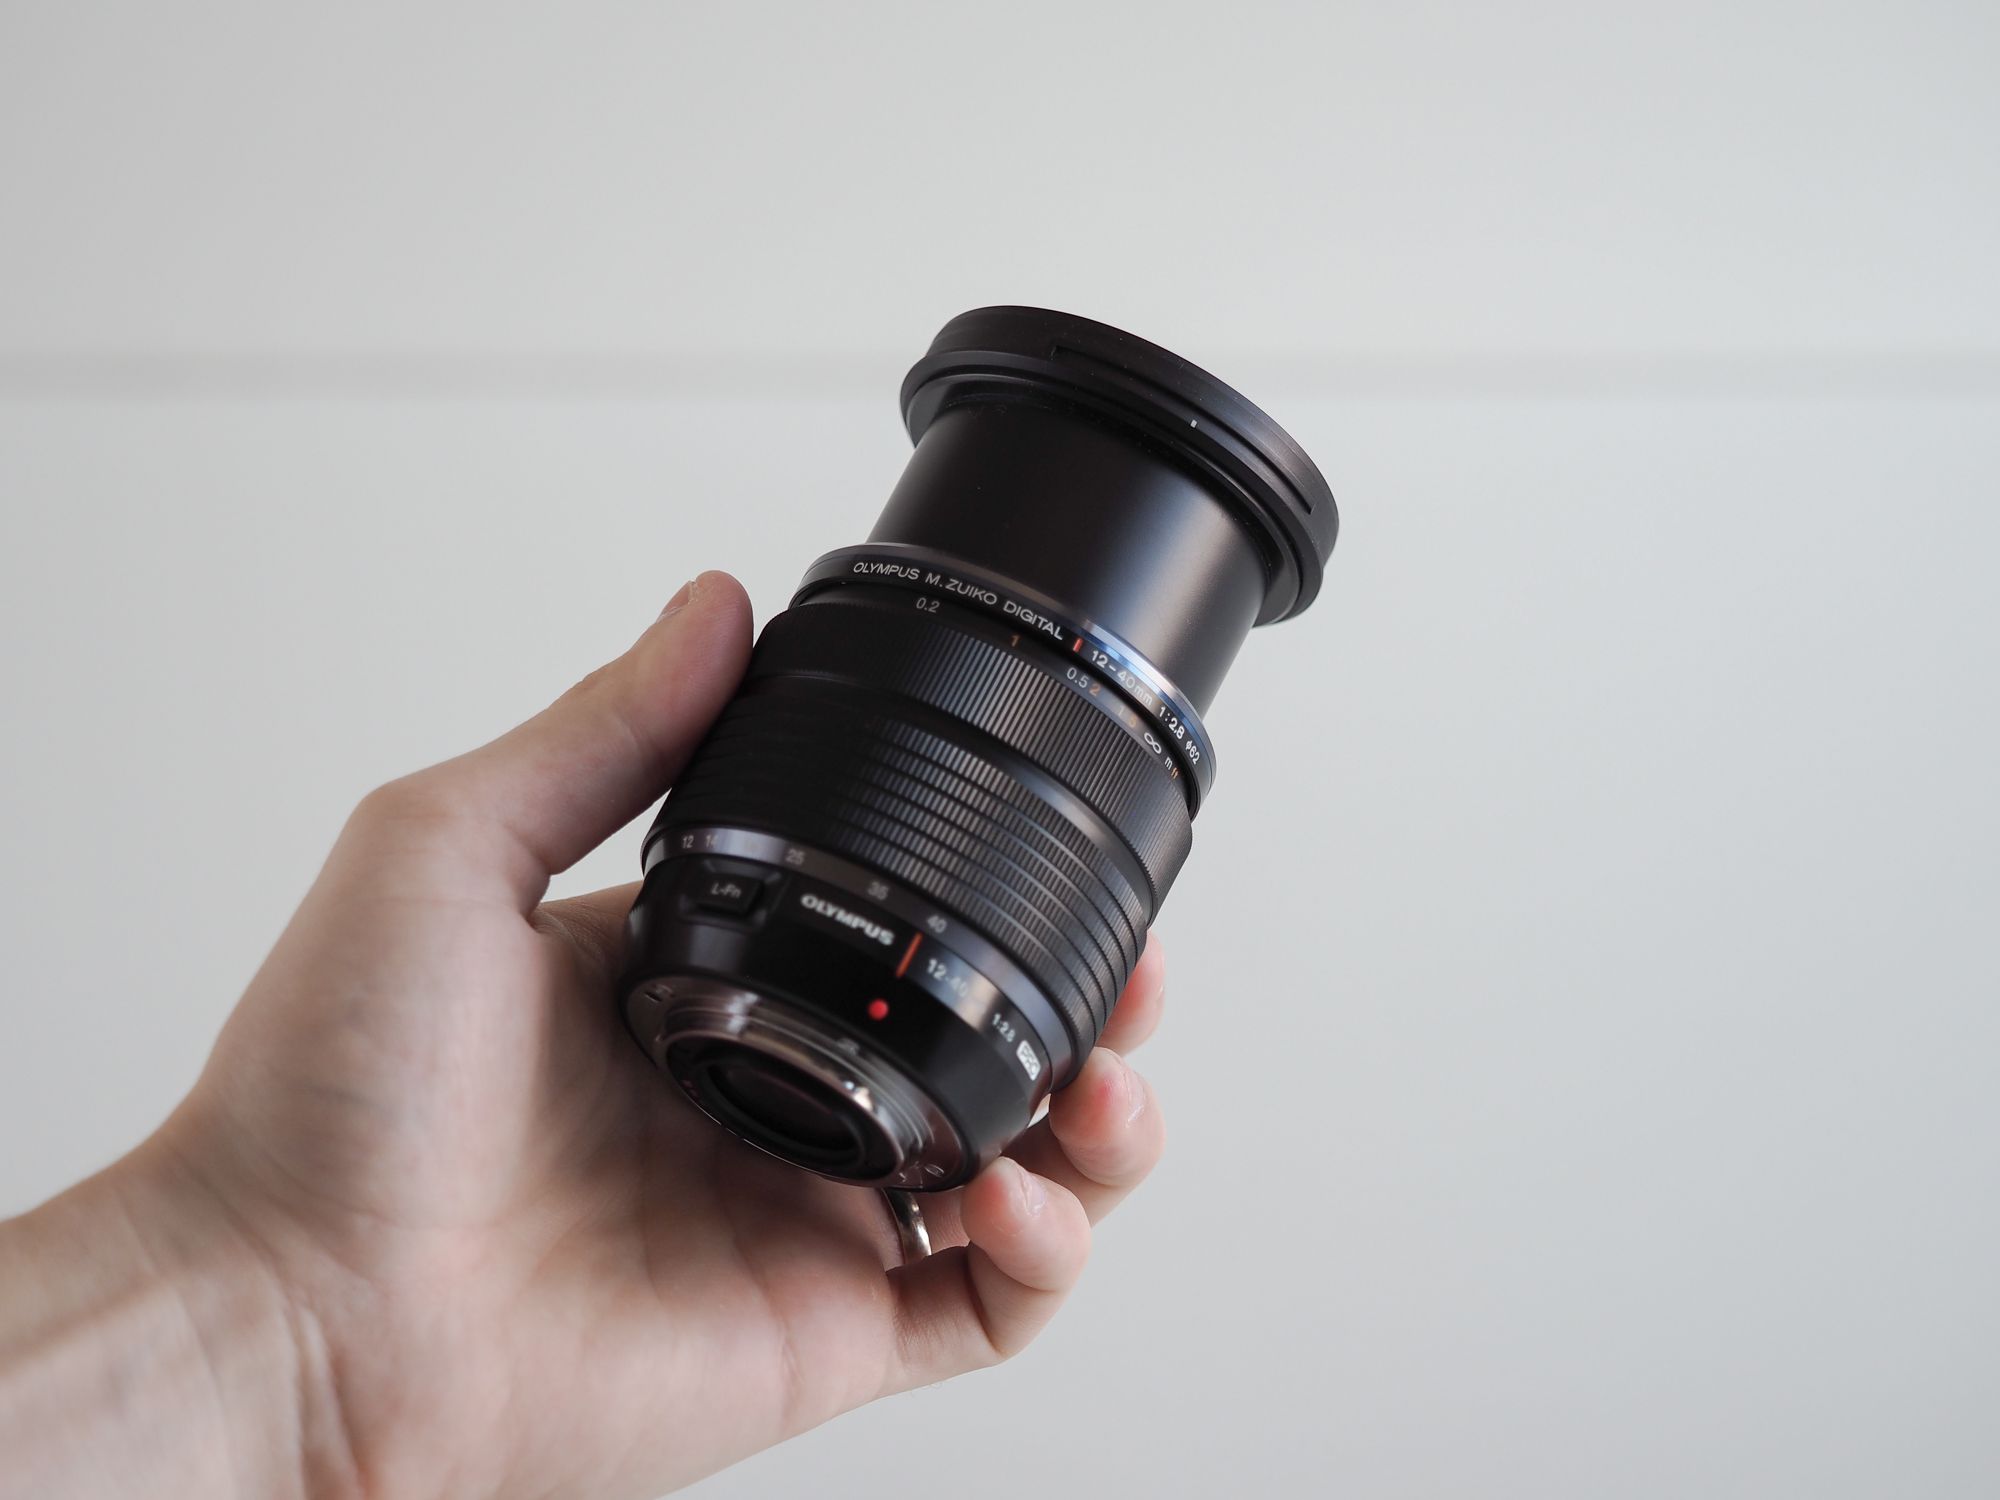 Olympus 12-40mm f/2.8 Pro Lens